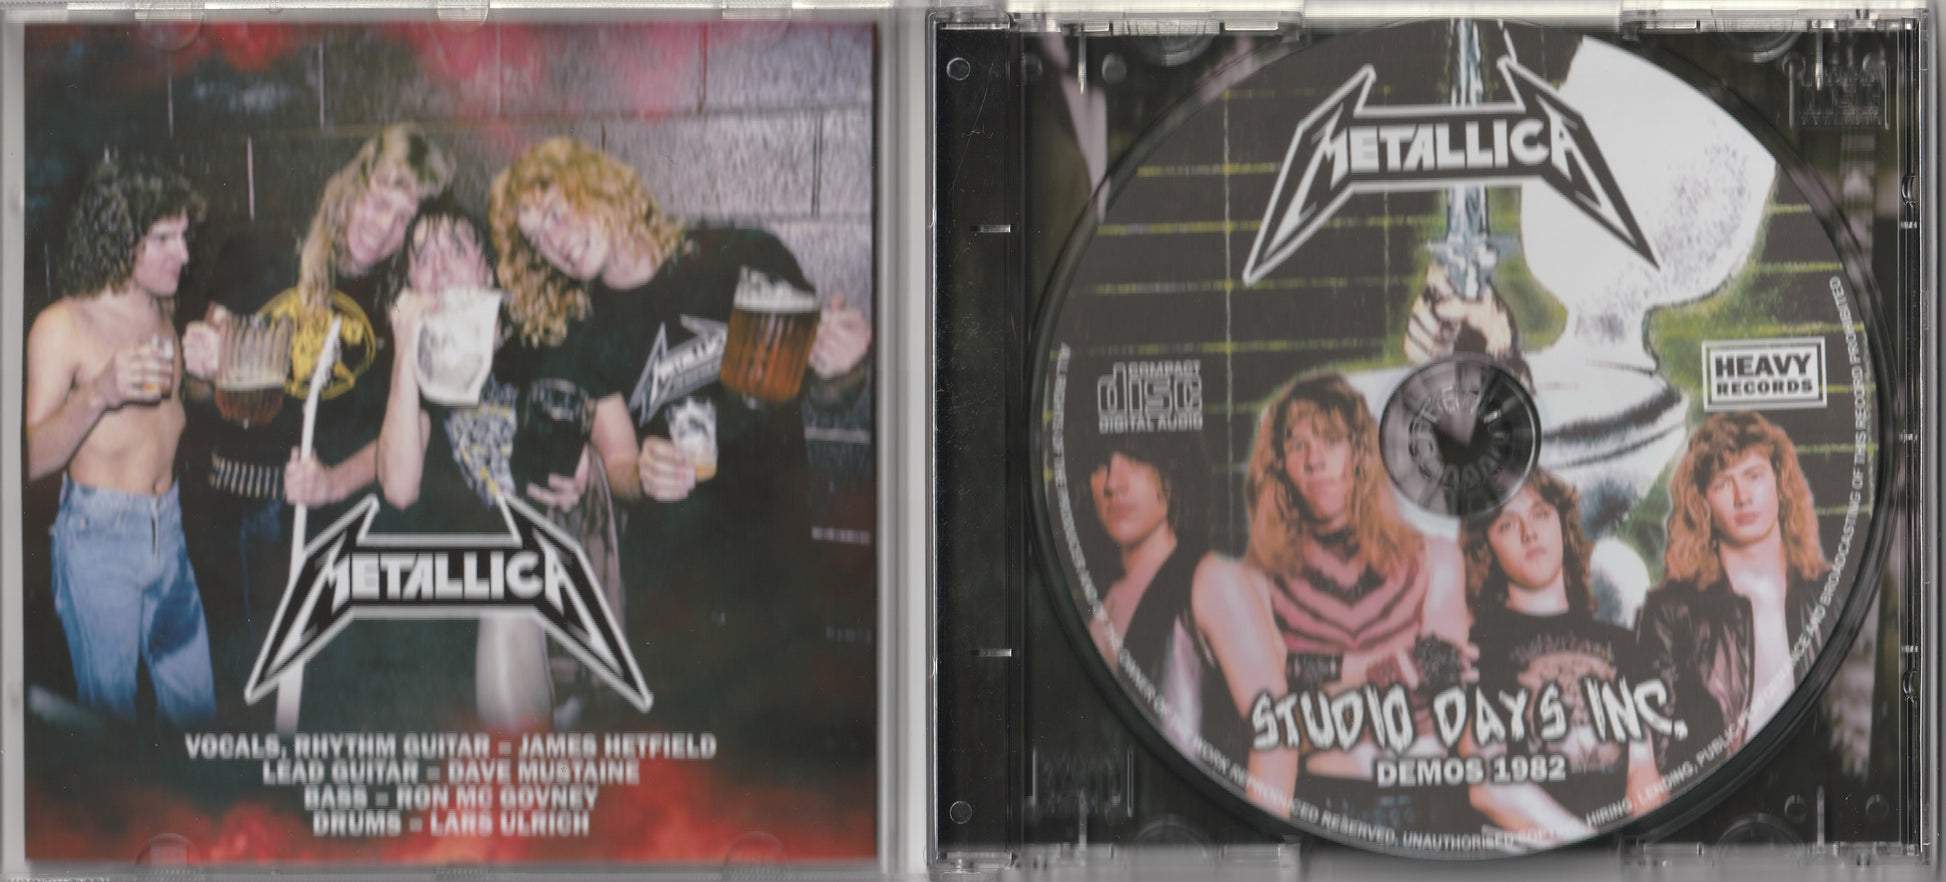 Metallica - Studio Days Inc. Demos 1982 CD – skilometal